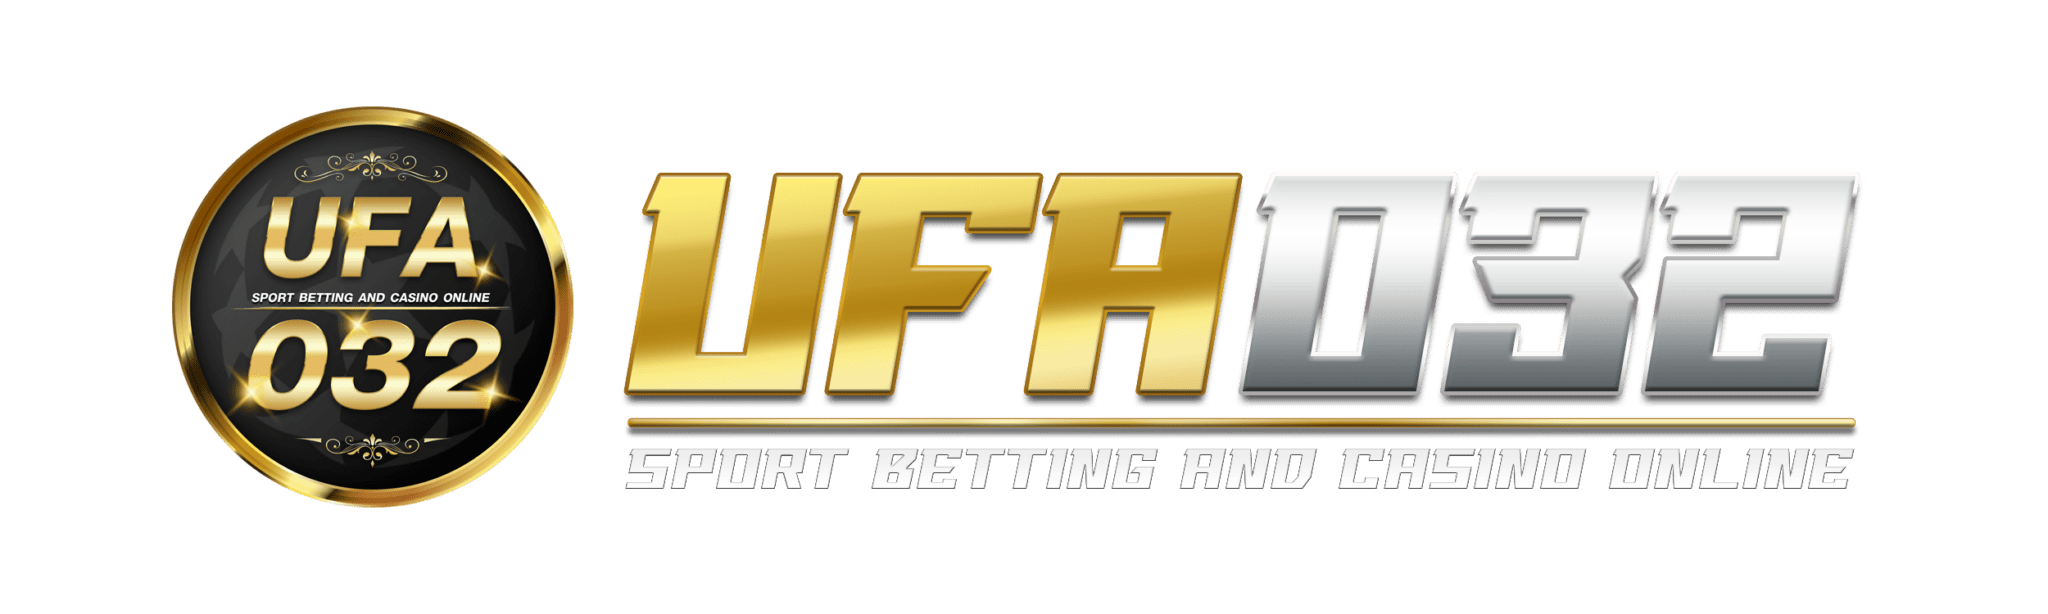 UFA032 logo